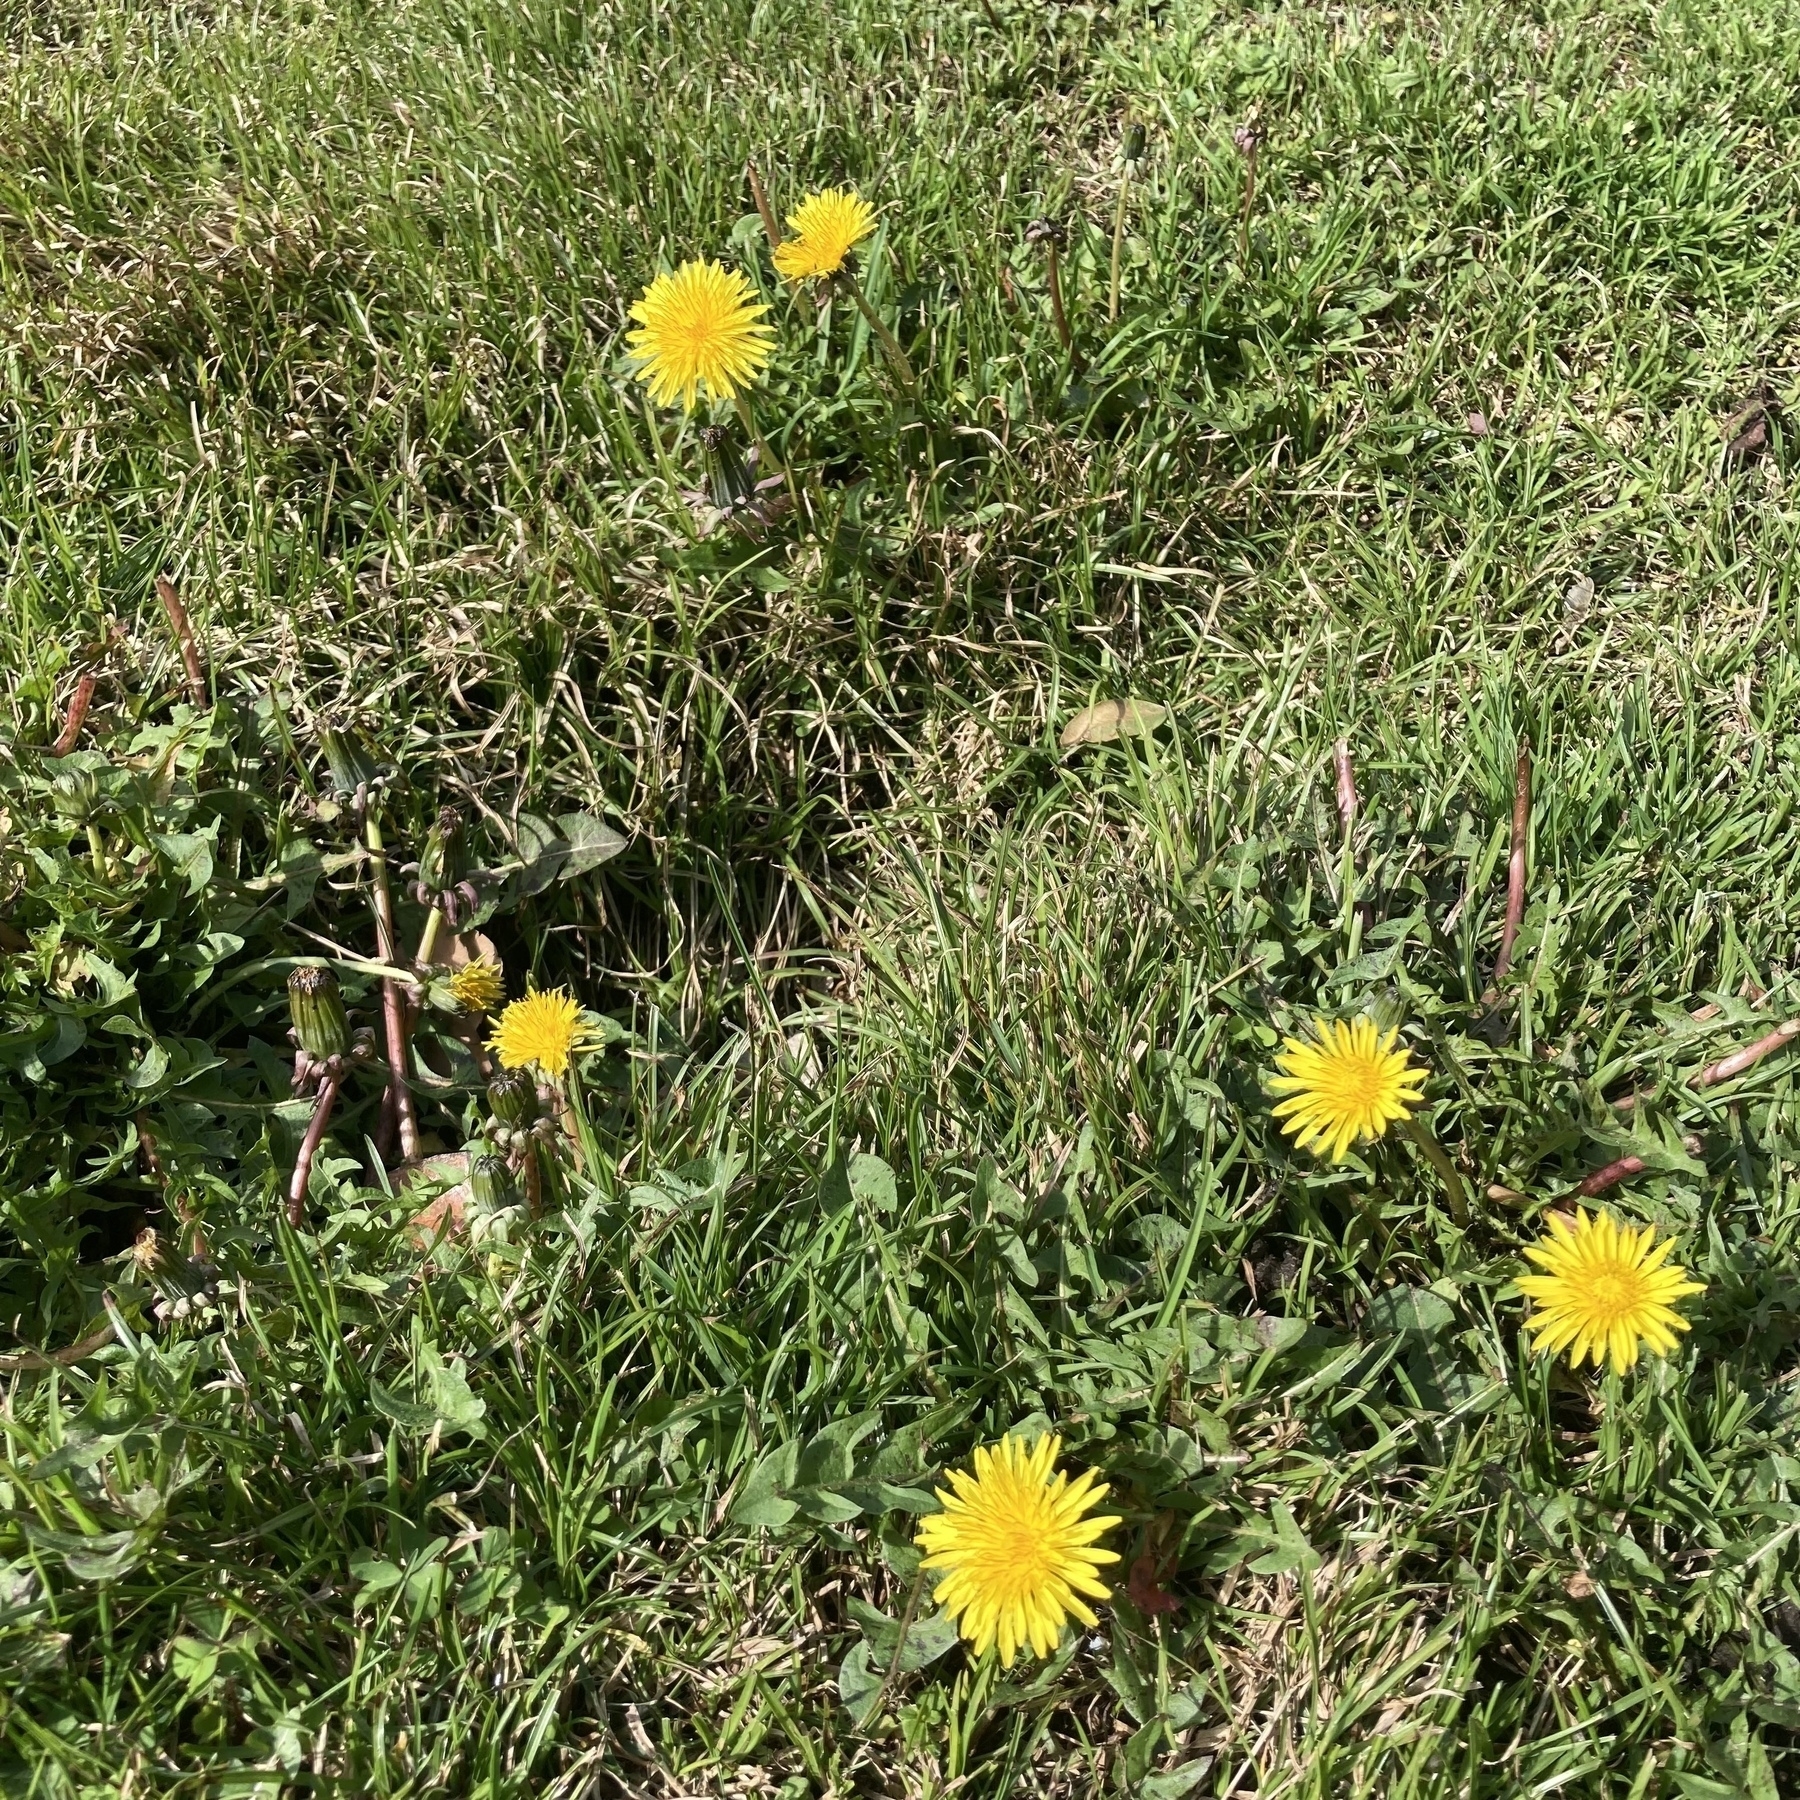 Dandelions on grass. 